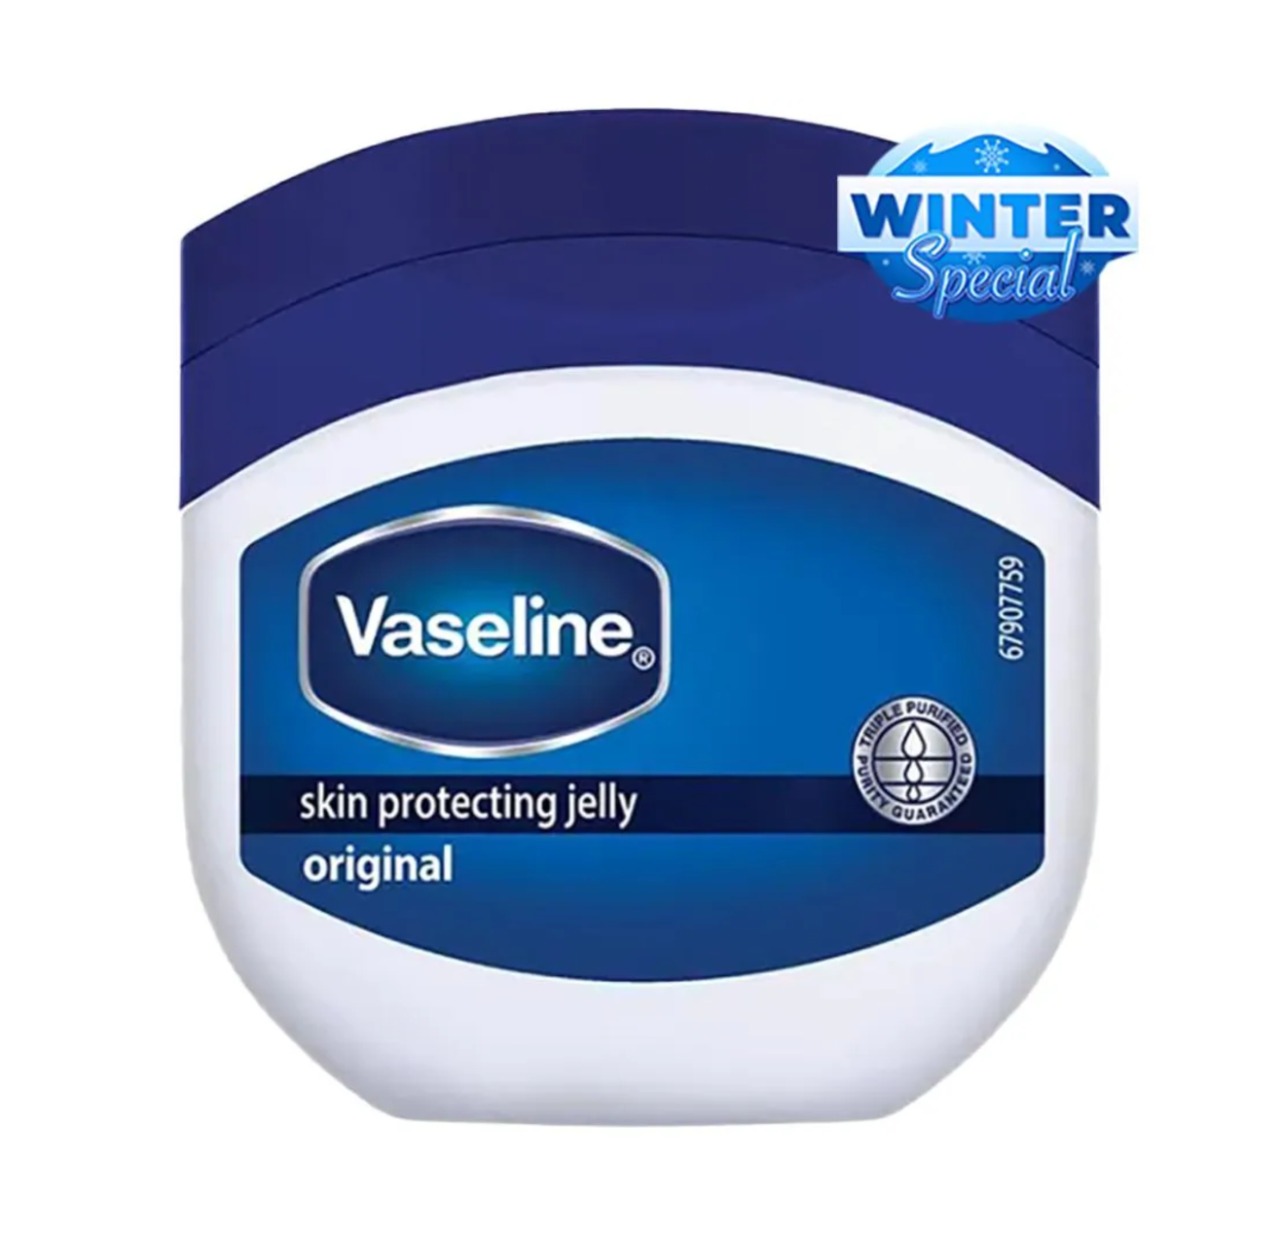 Vaseline Original Pure Skin Jelly, 21g